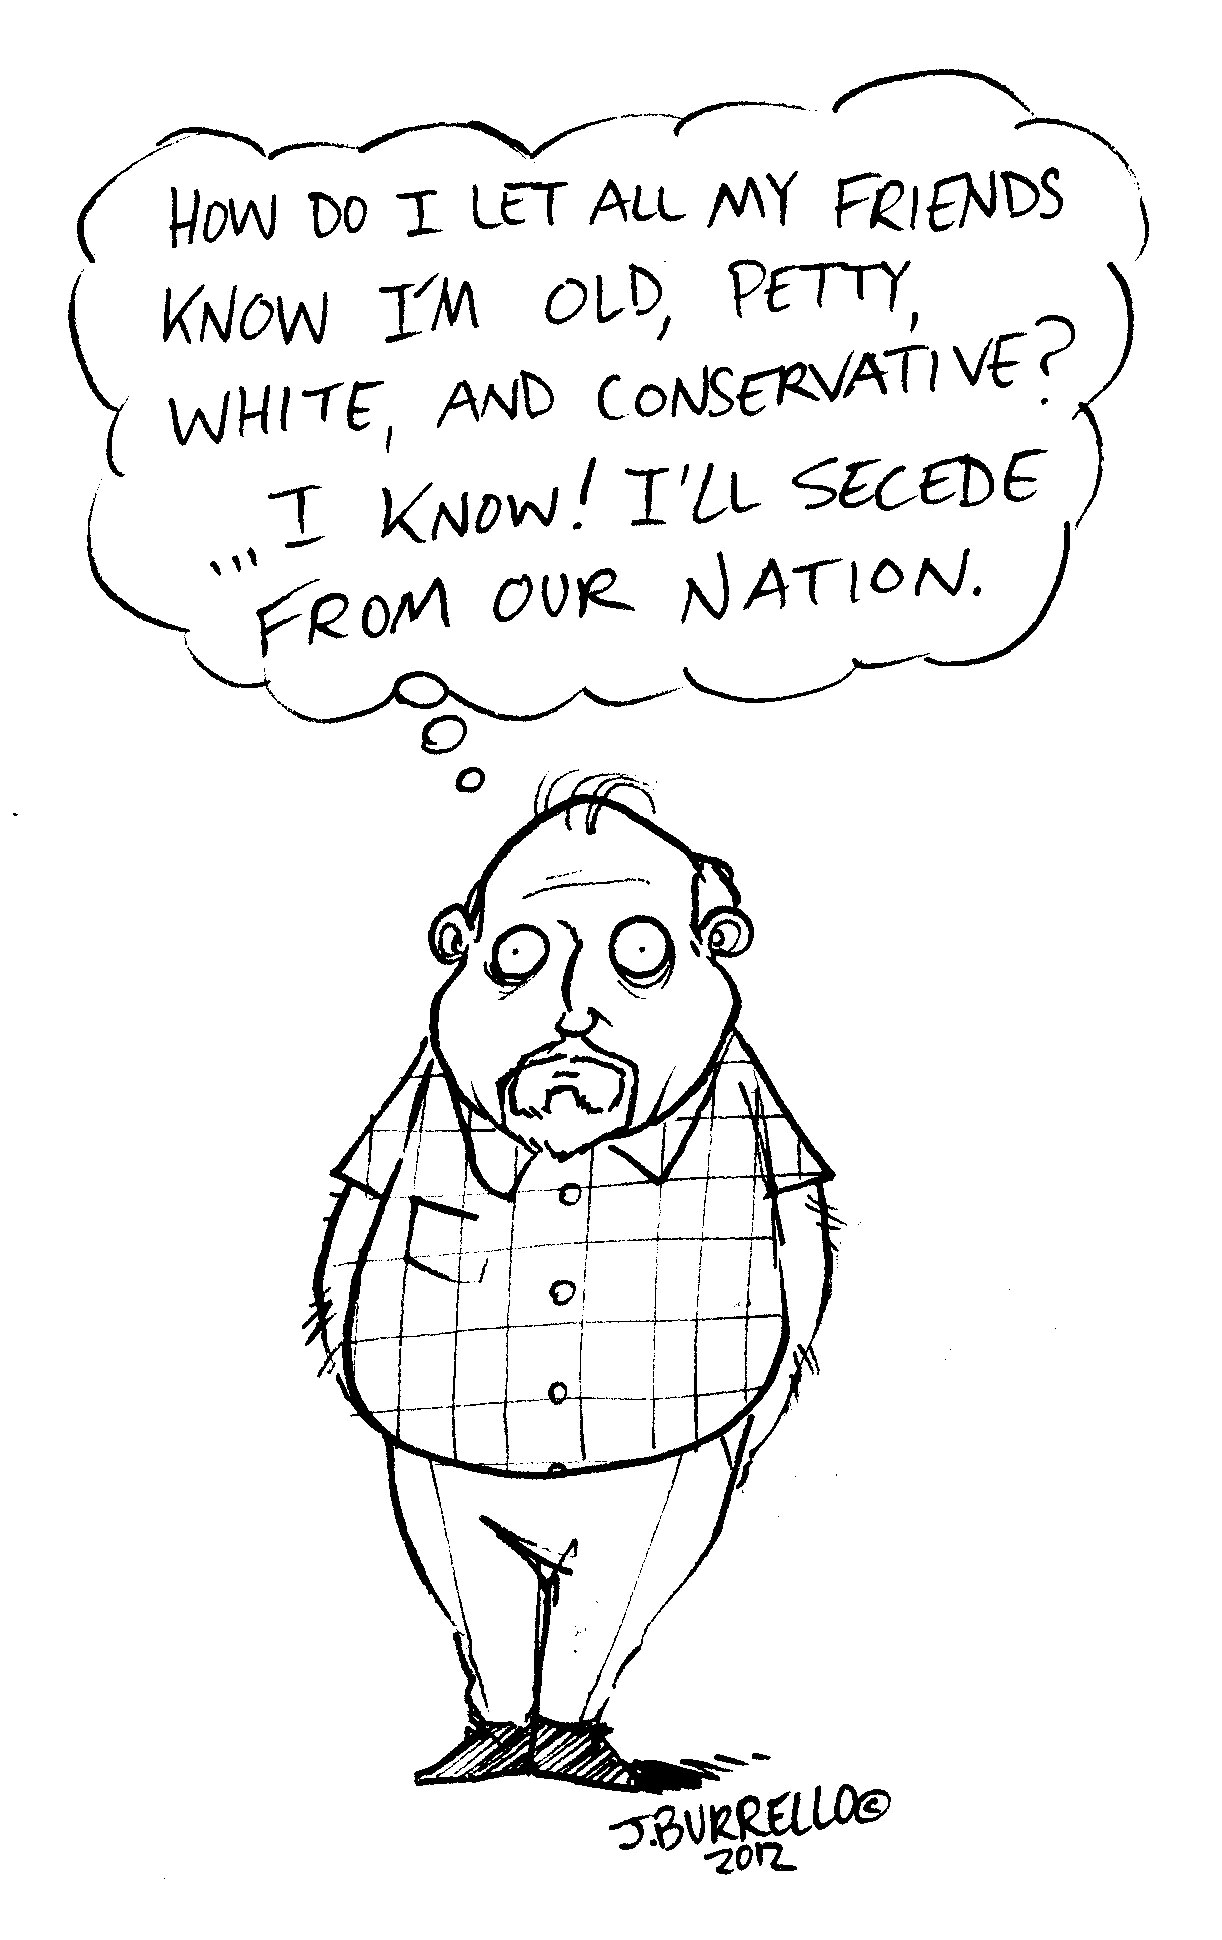 Racist Obama Cartoon